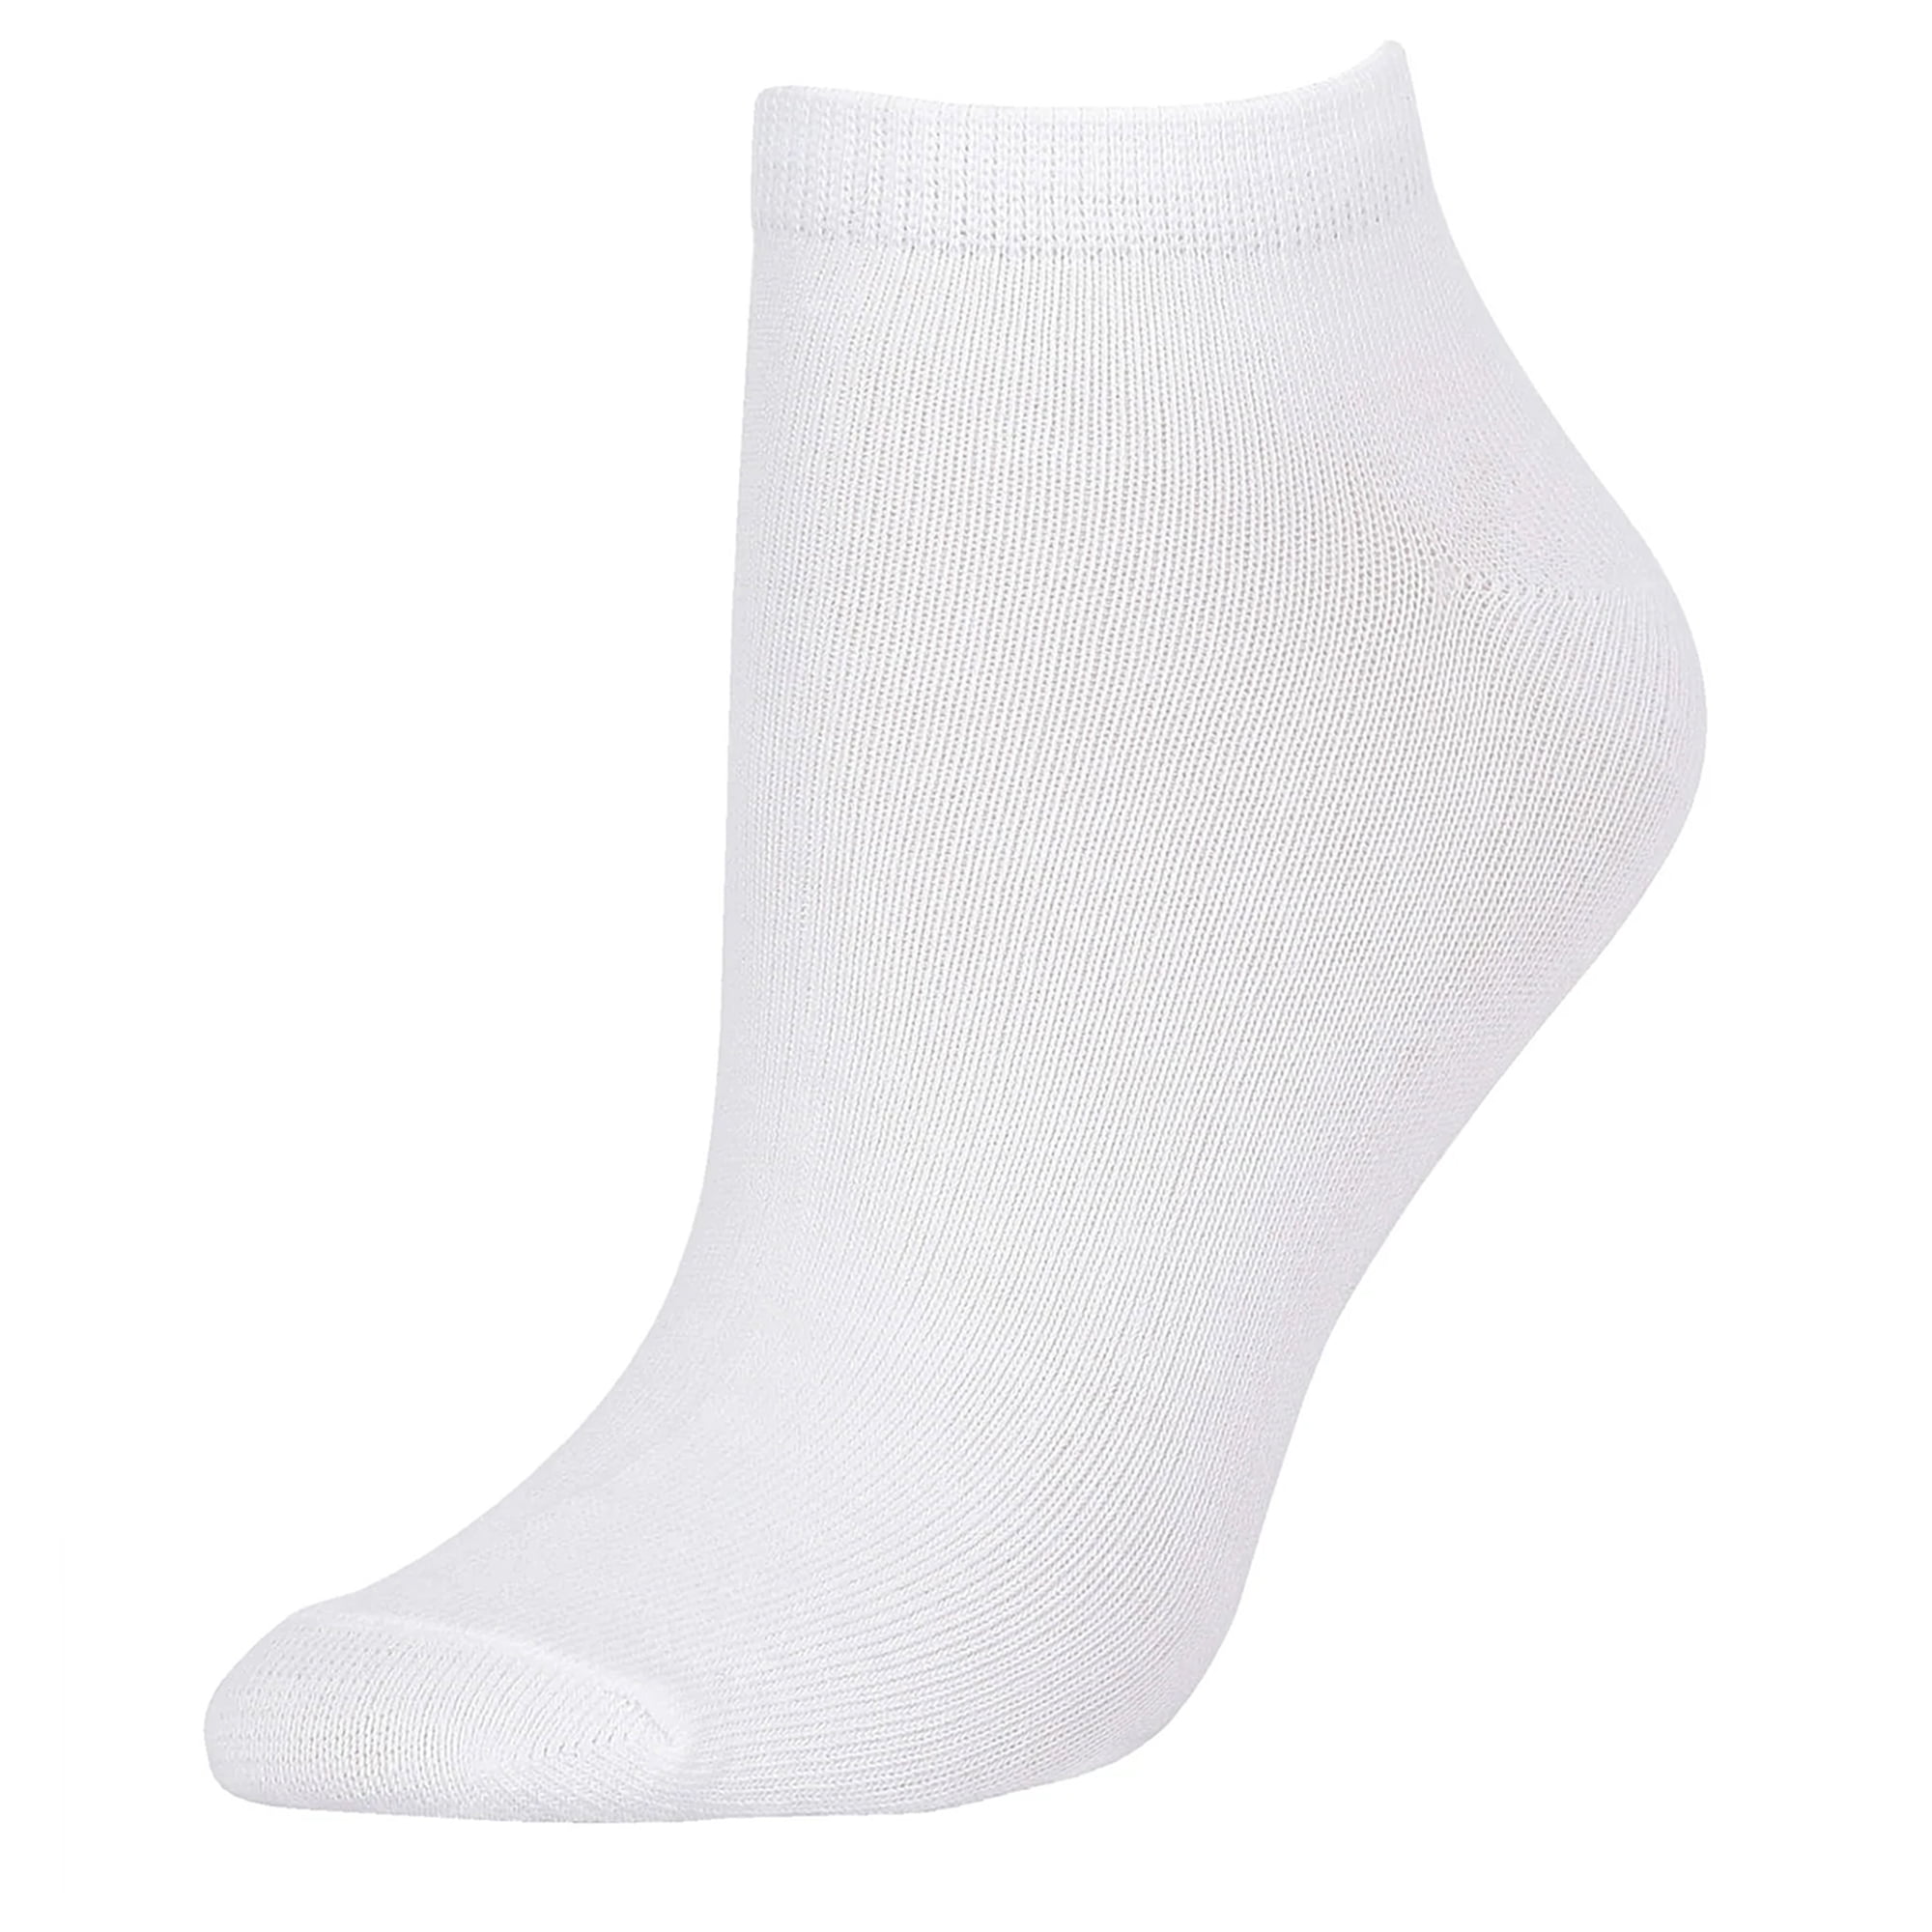 6X Pairs Men's Big Foot Trainer Liner Ankle Socks Cotton Blend Sock Size 11-14 